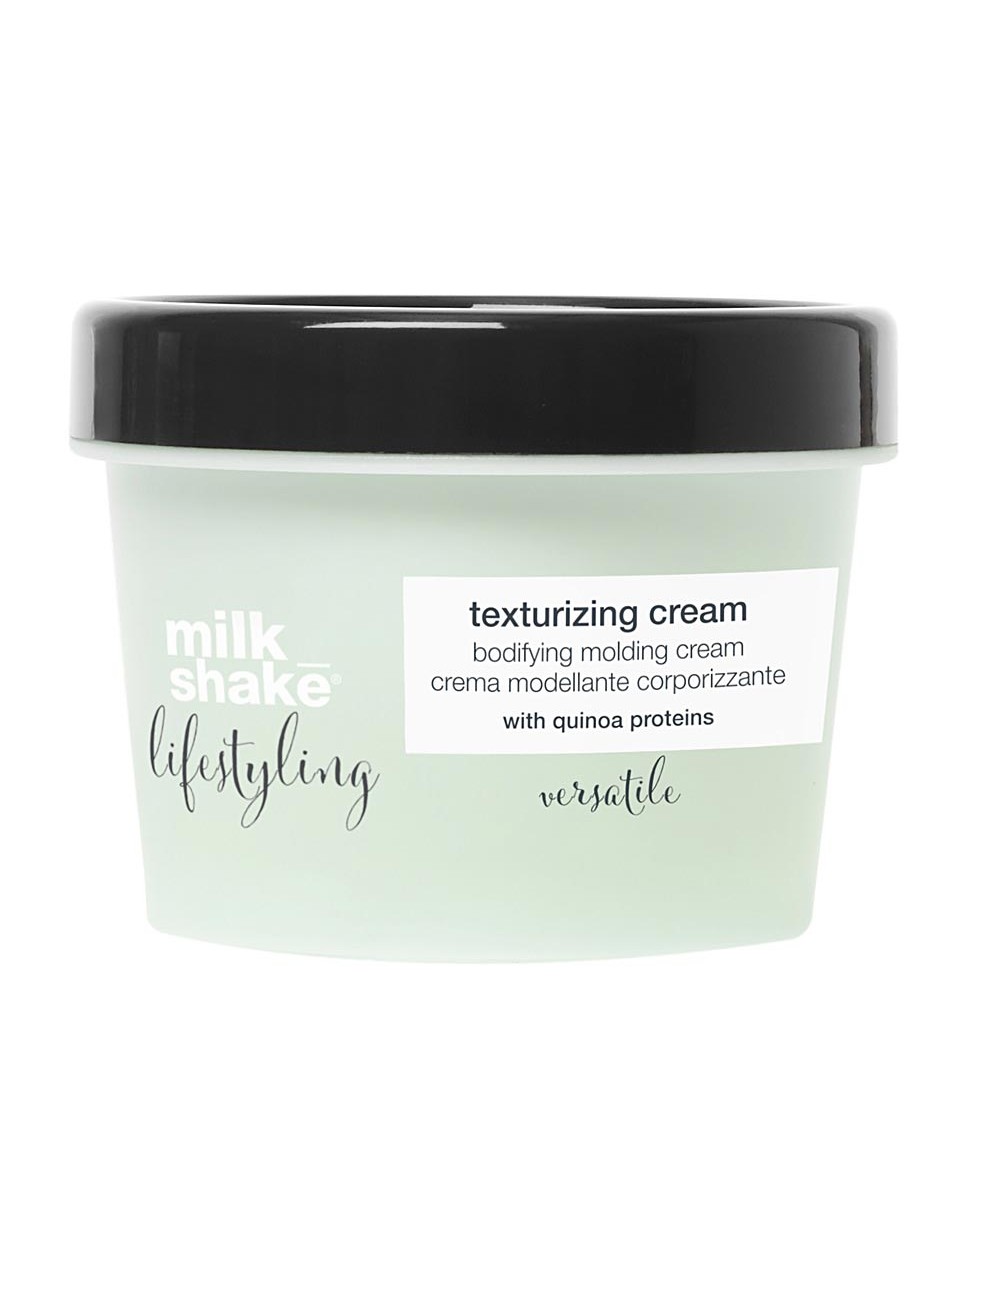 LIFESTYLING texturizing cream 100 ml